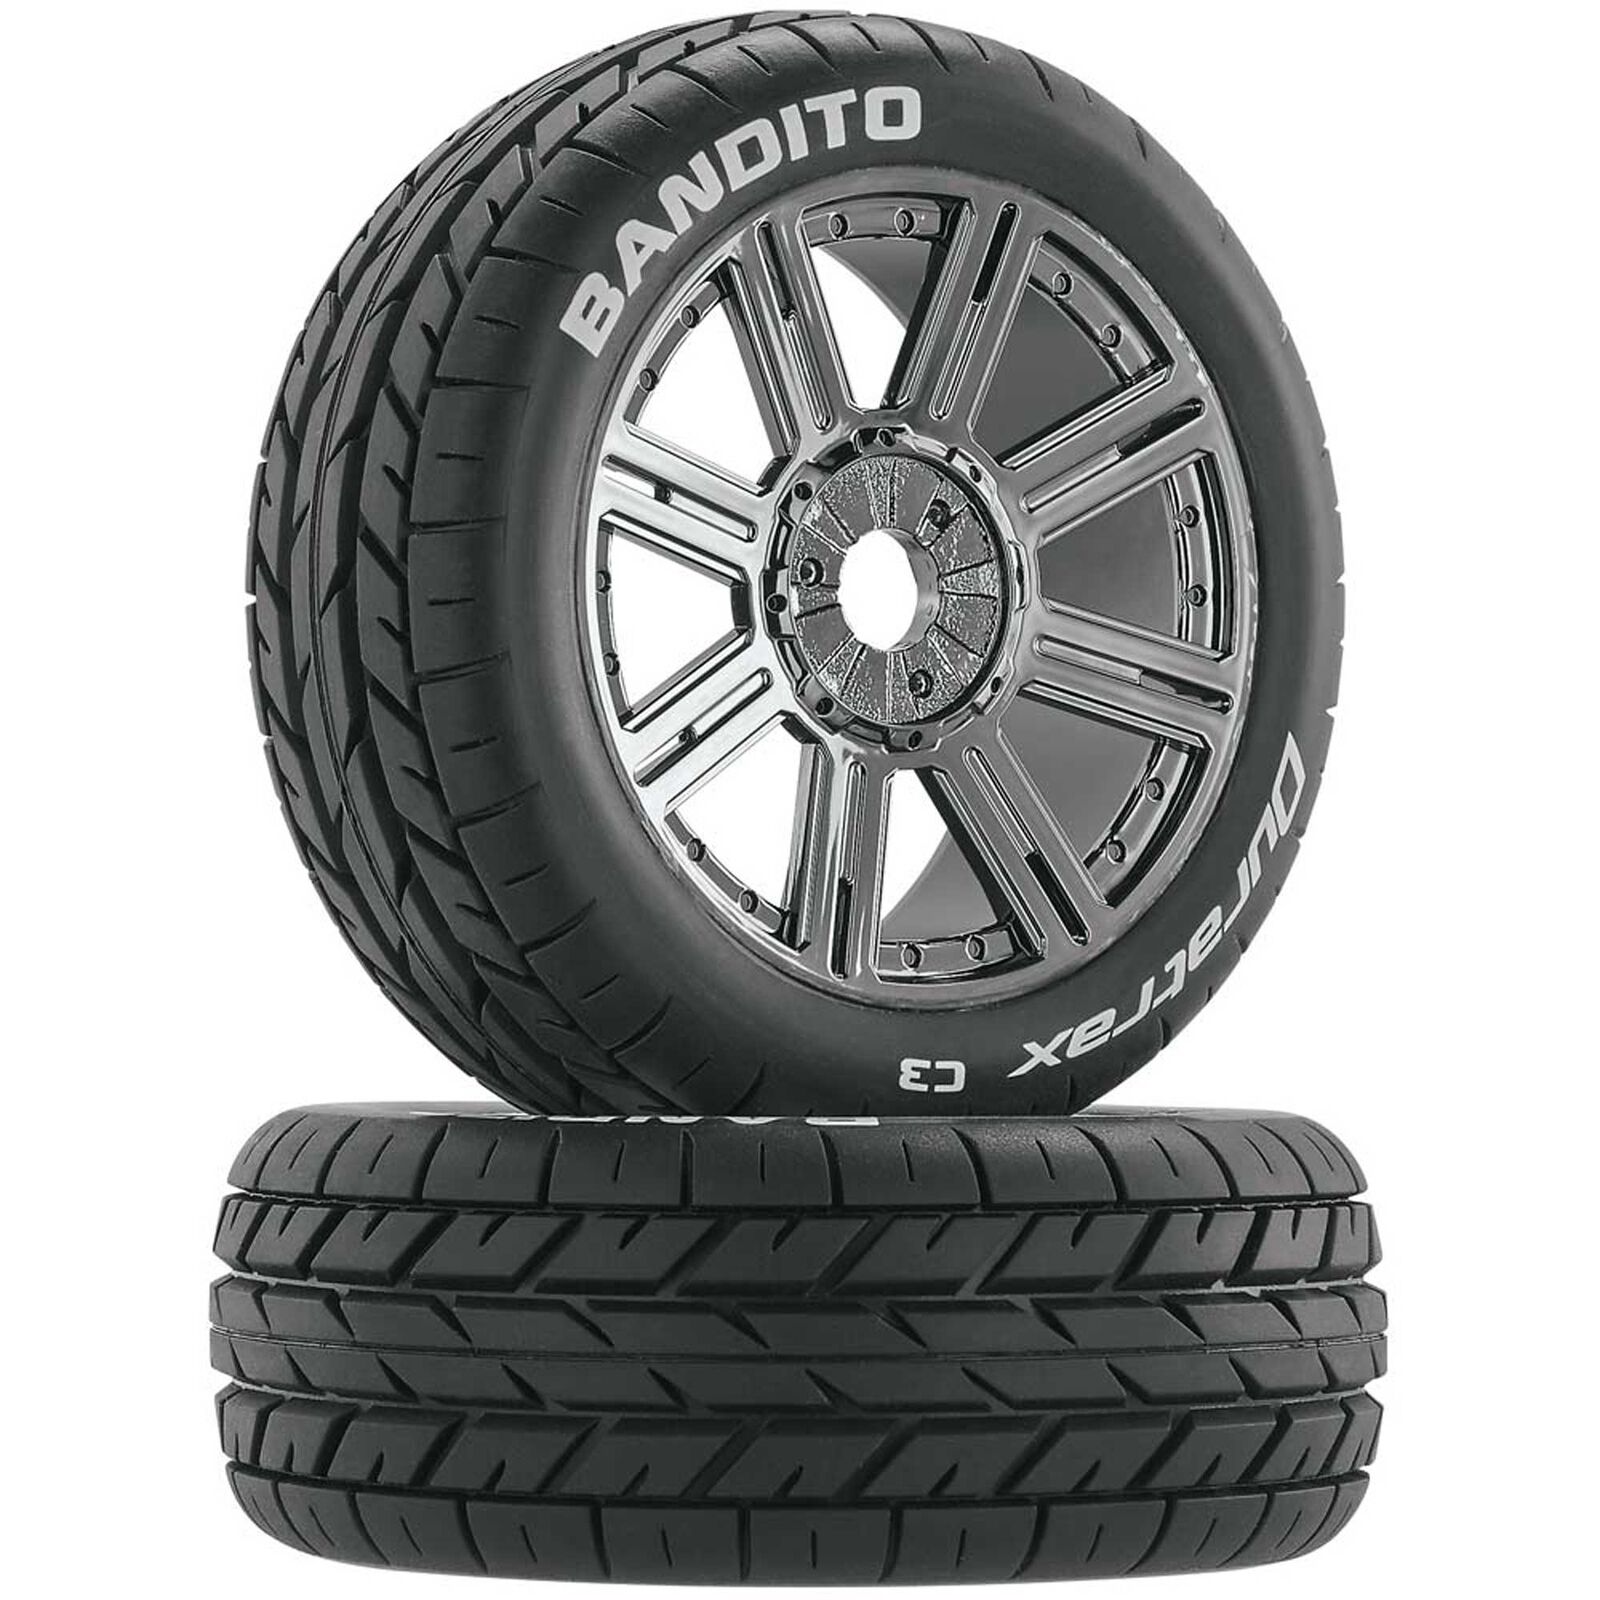 Bandito 1/8 Buggy Tire C3 Mounted Spoke Tires, Chrome (2)